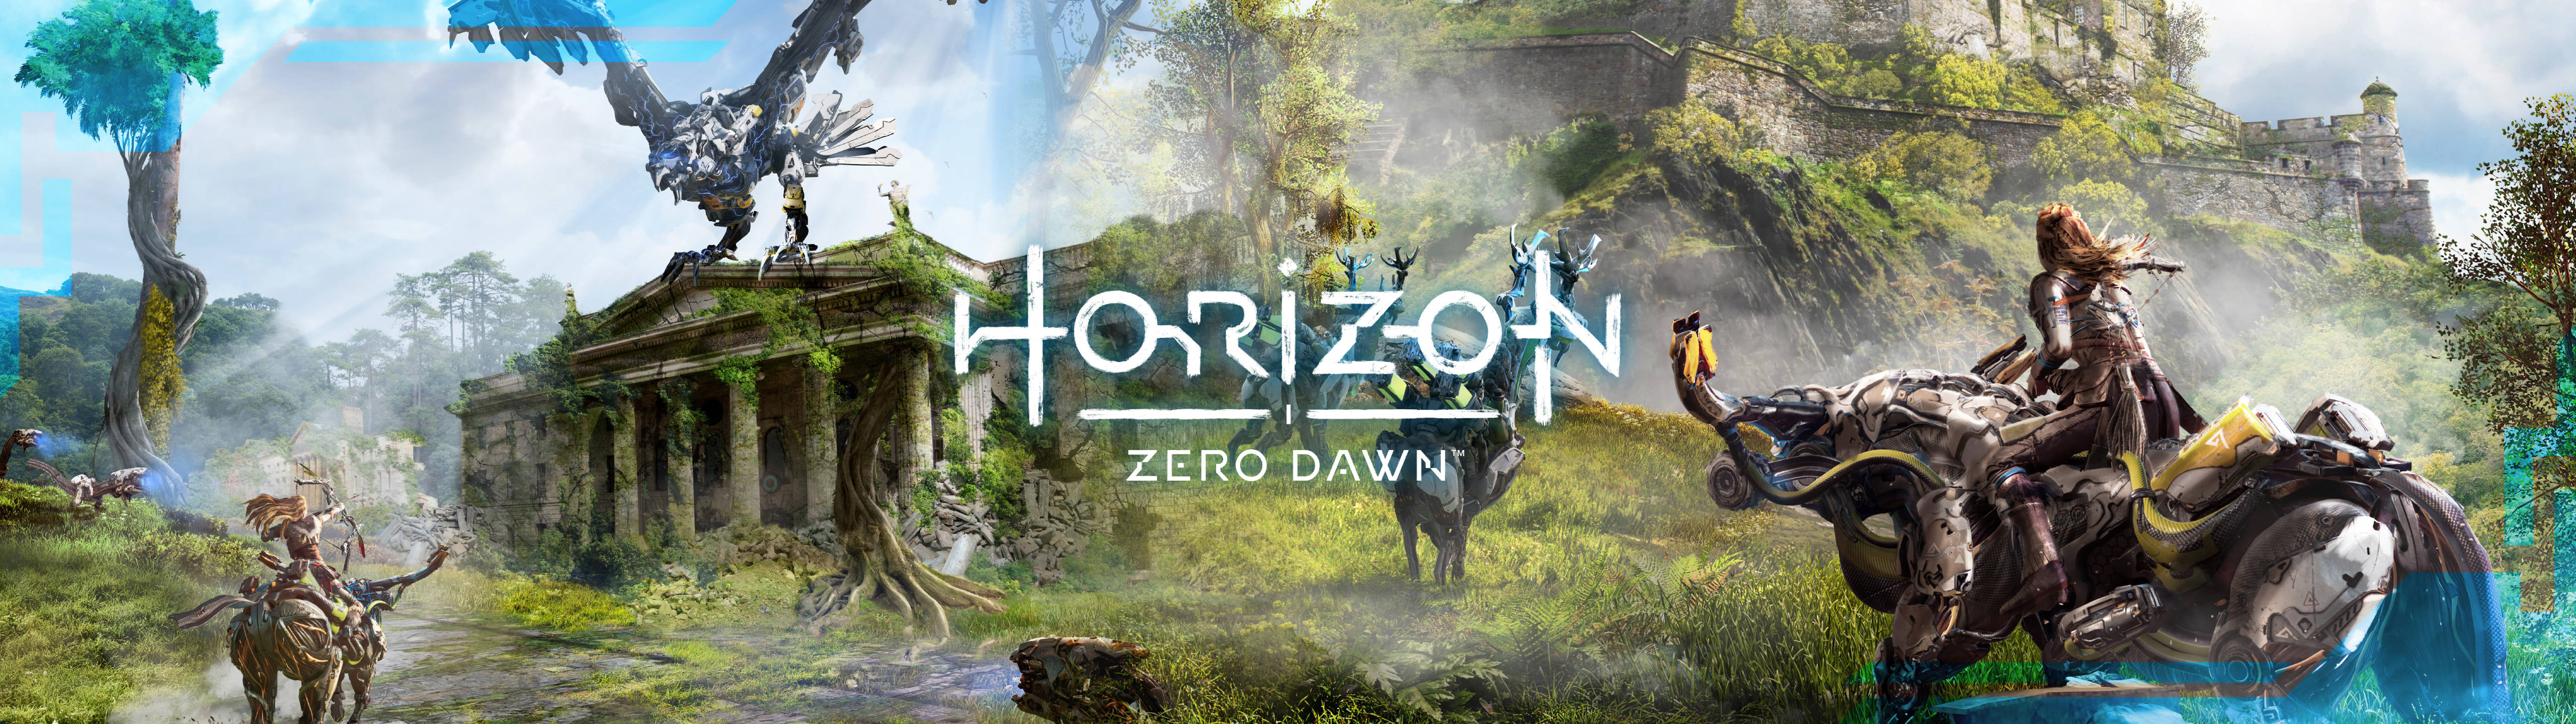 Horizon Zero Dawn Landscape 5120x1440 Gaming